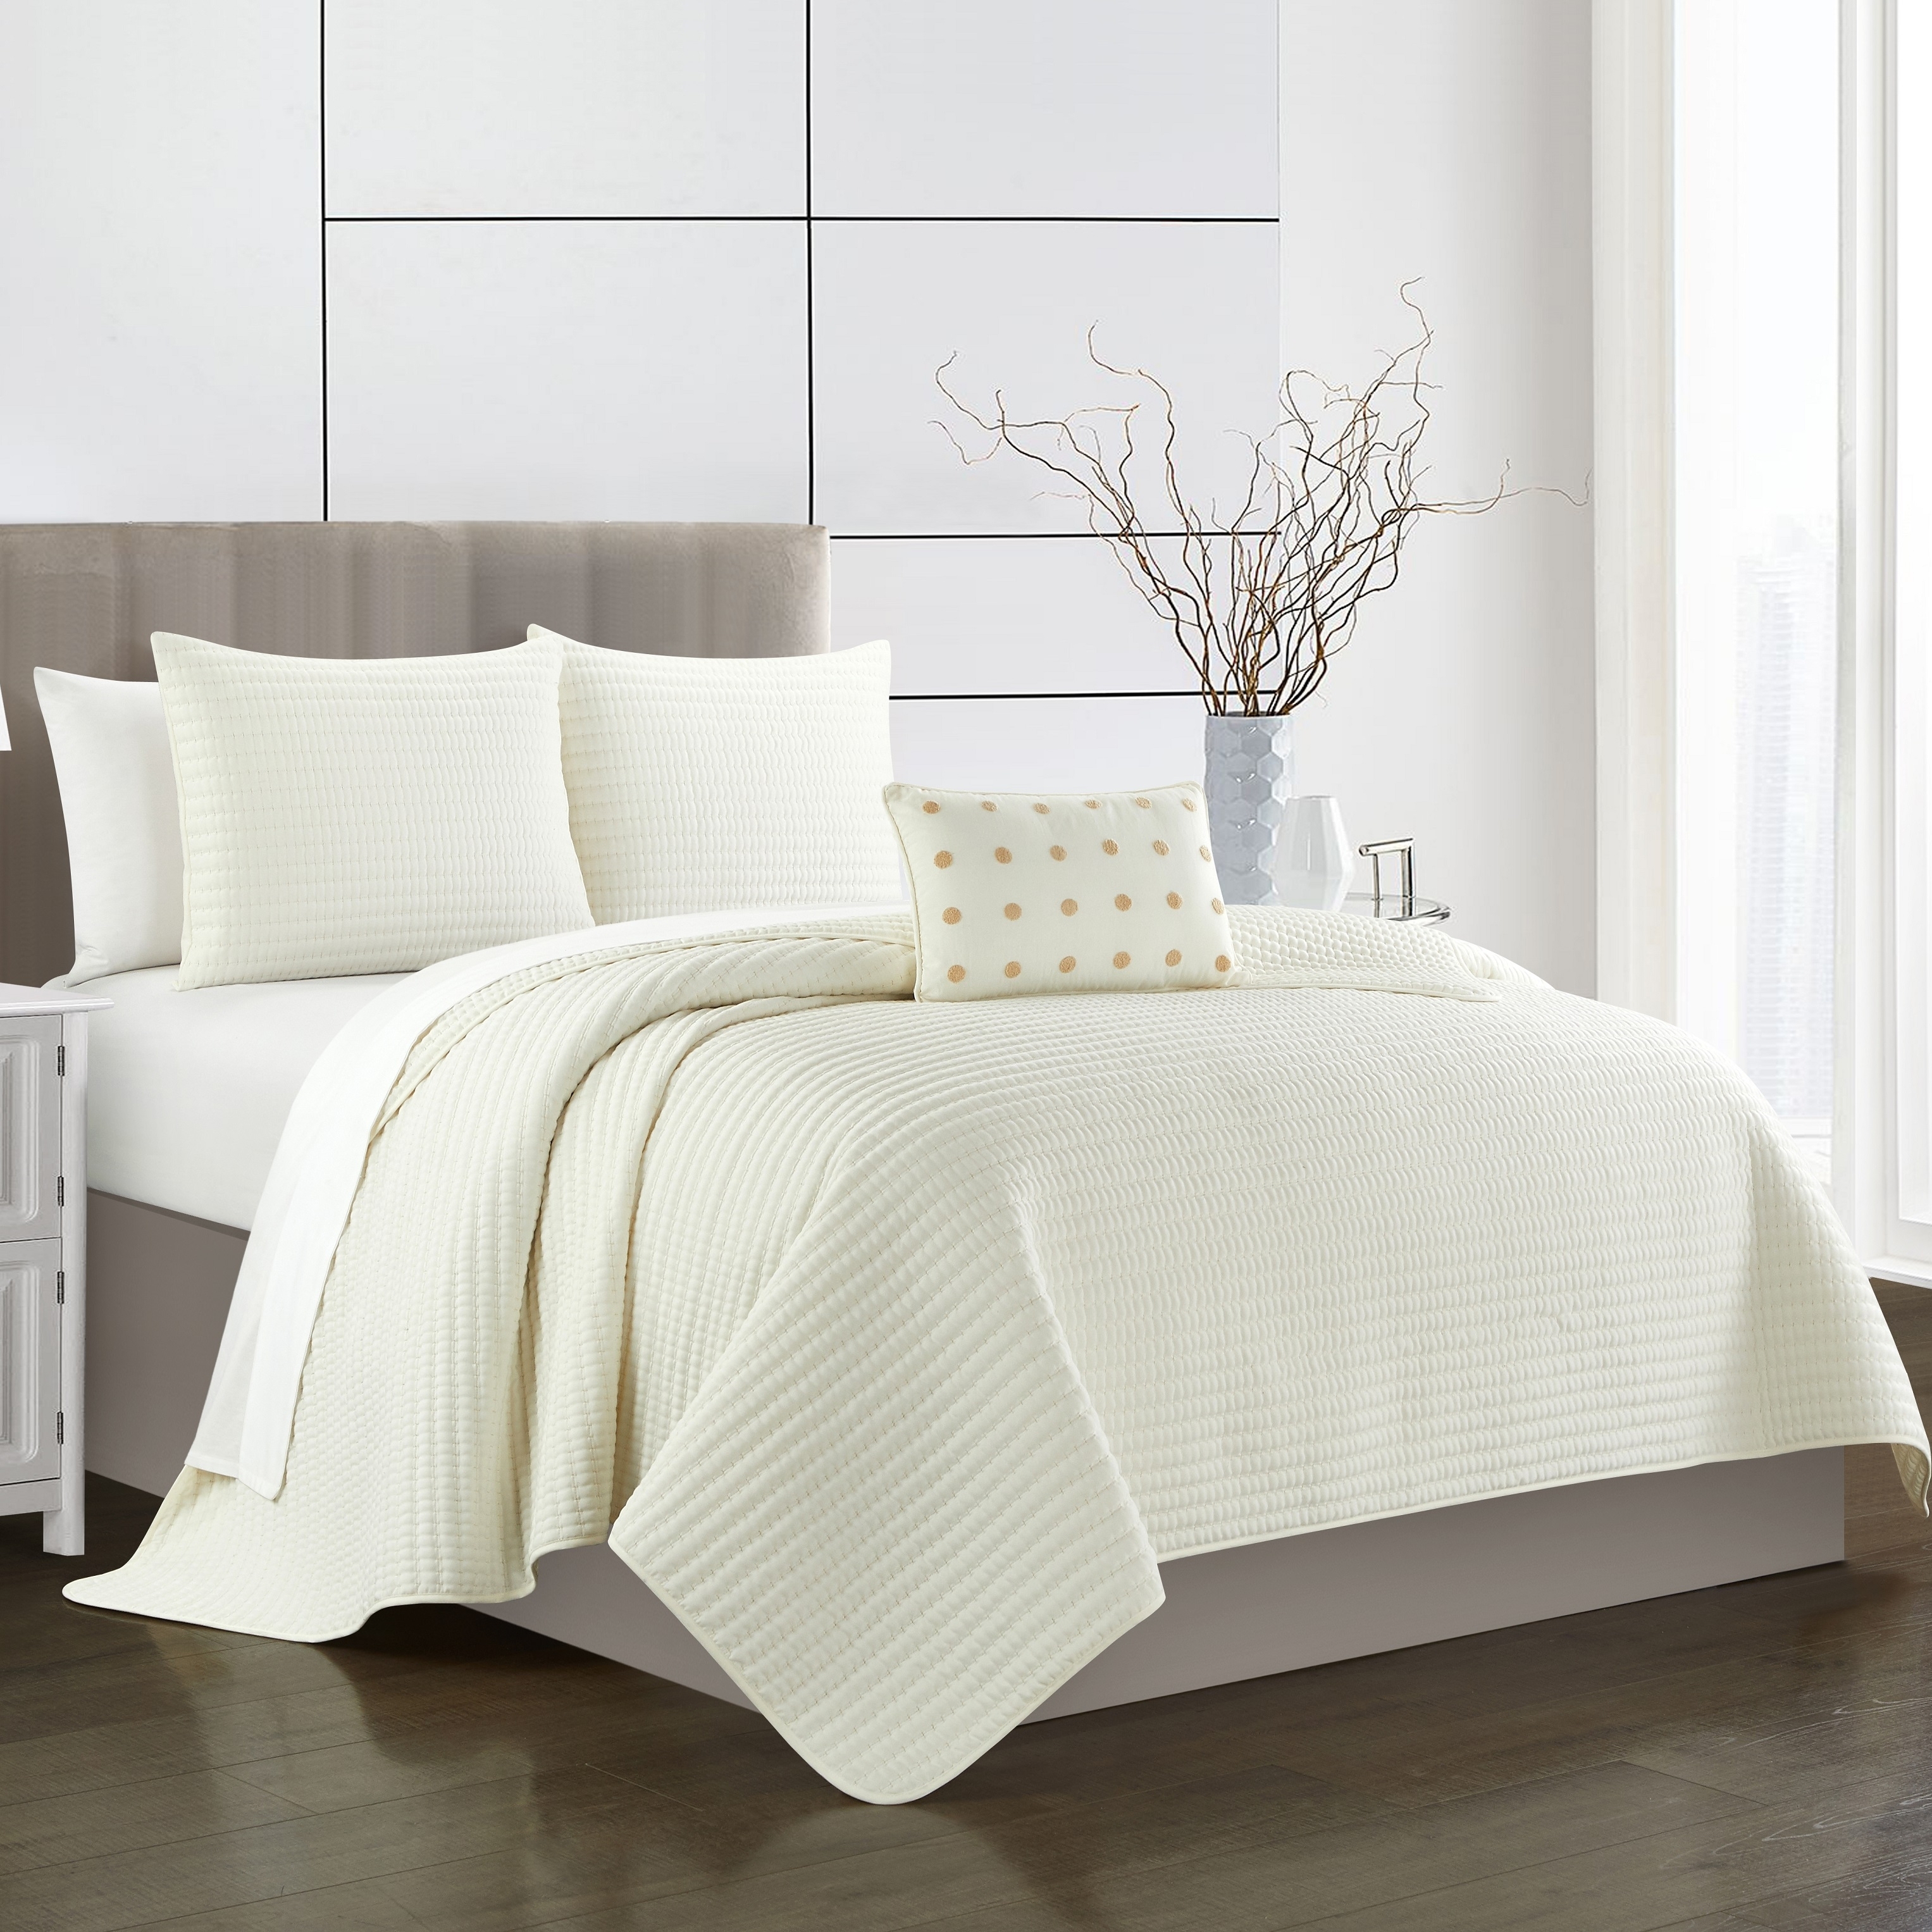 Hayden 4 Piece Quilt Set Striped Box Stitched Design Bedding - Decorative Pillow Shams Included - Beige, Queen